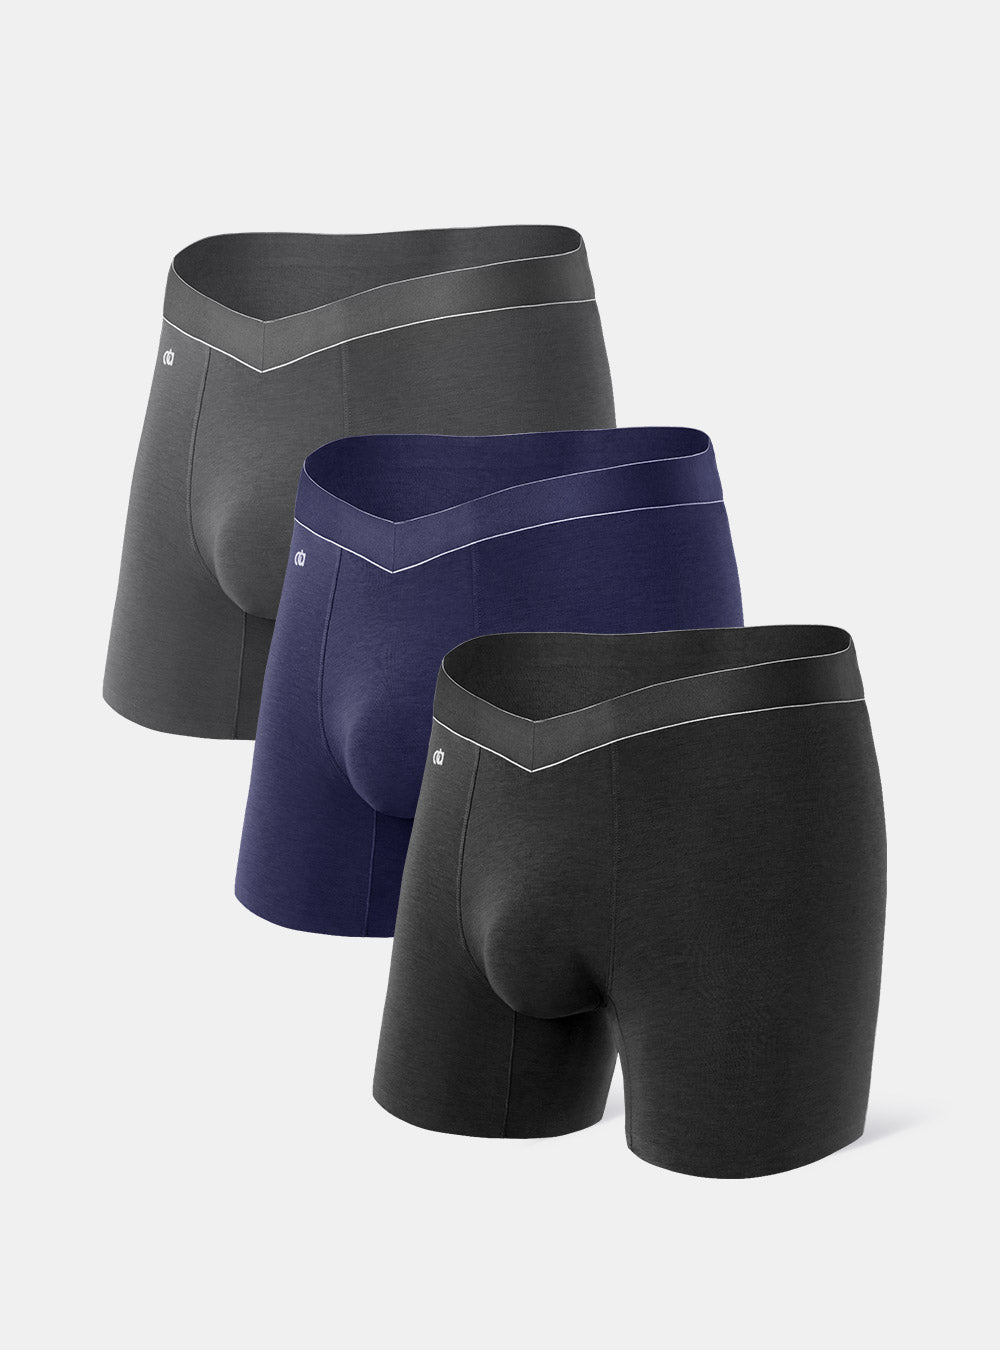 David Archy Mens Underwear Breathable Boxer Briefs Bamboo Rayon